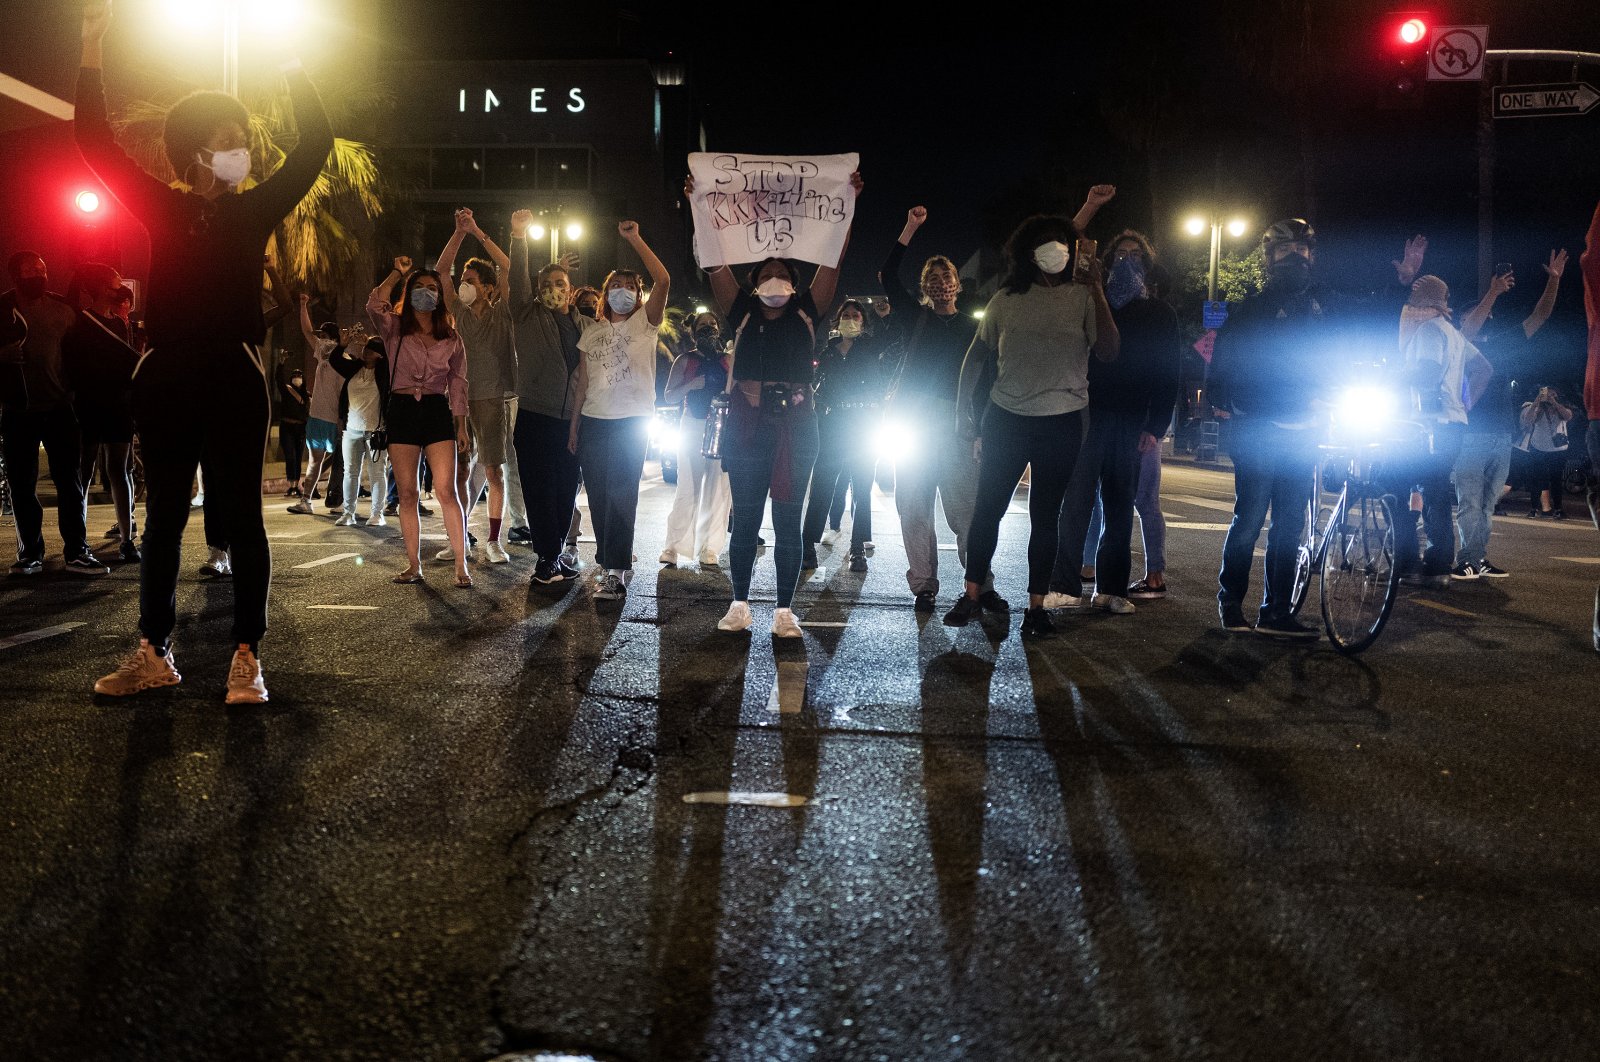 Demonstrators block traffic during a protest over the death of George Floyd in Minneapolis police custody earlier in the week, May 27, 2020, in Los Angeles. (AP Photo)